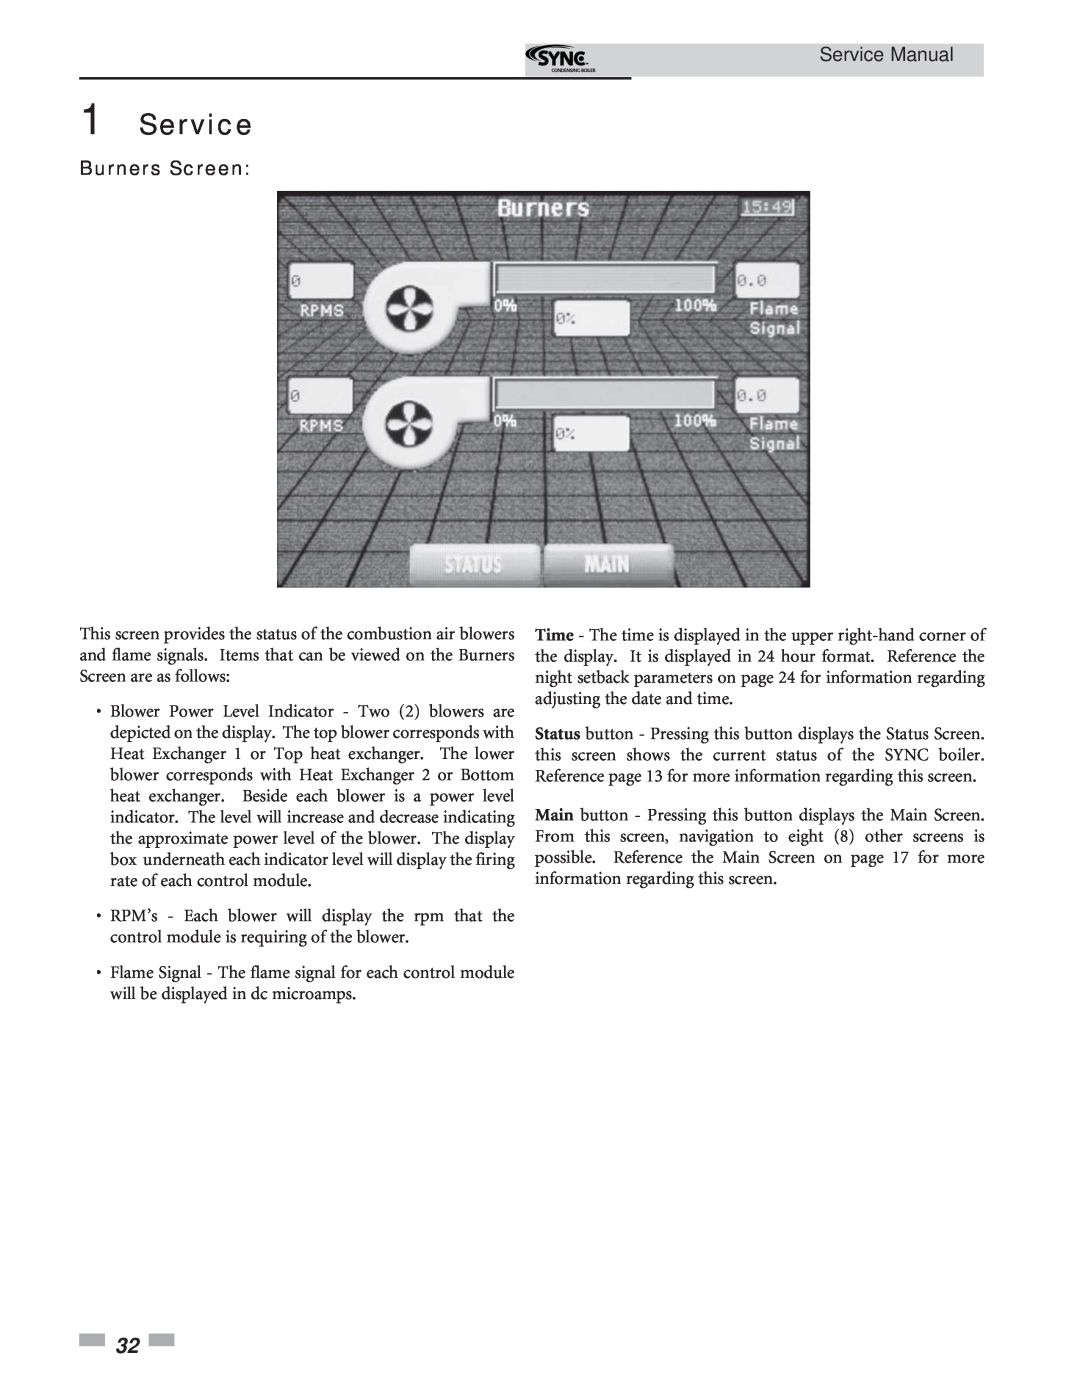 Lochinvar 1.3 service manual Service Manual, Burners Screen 